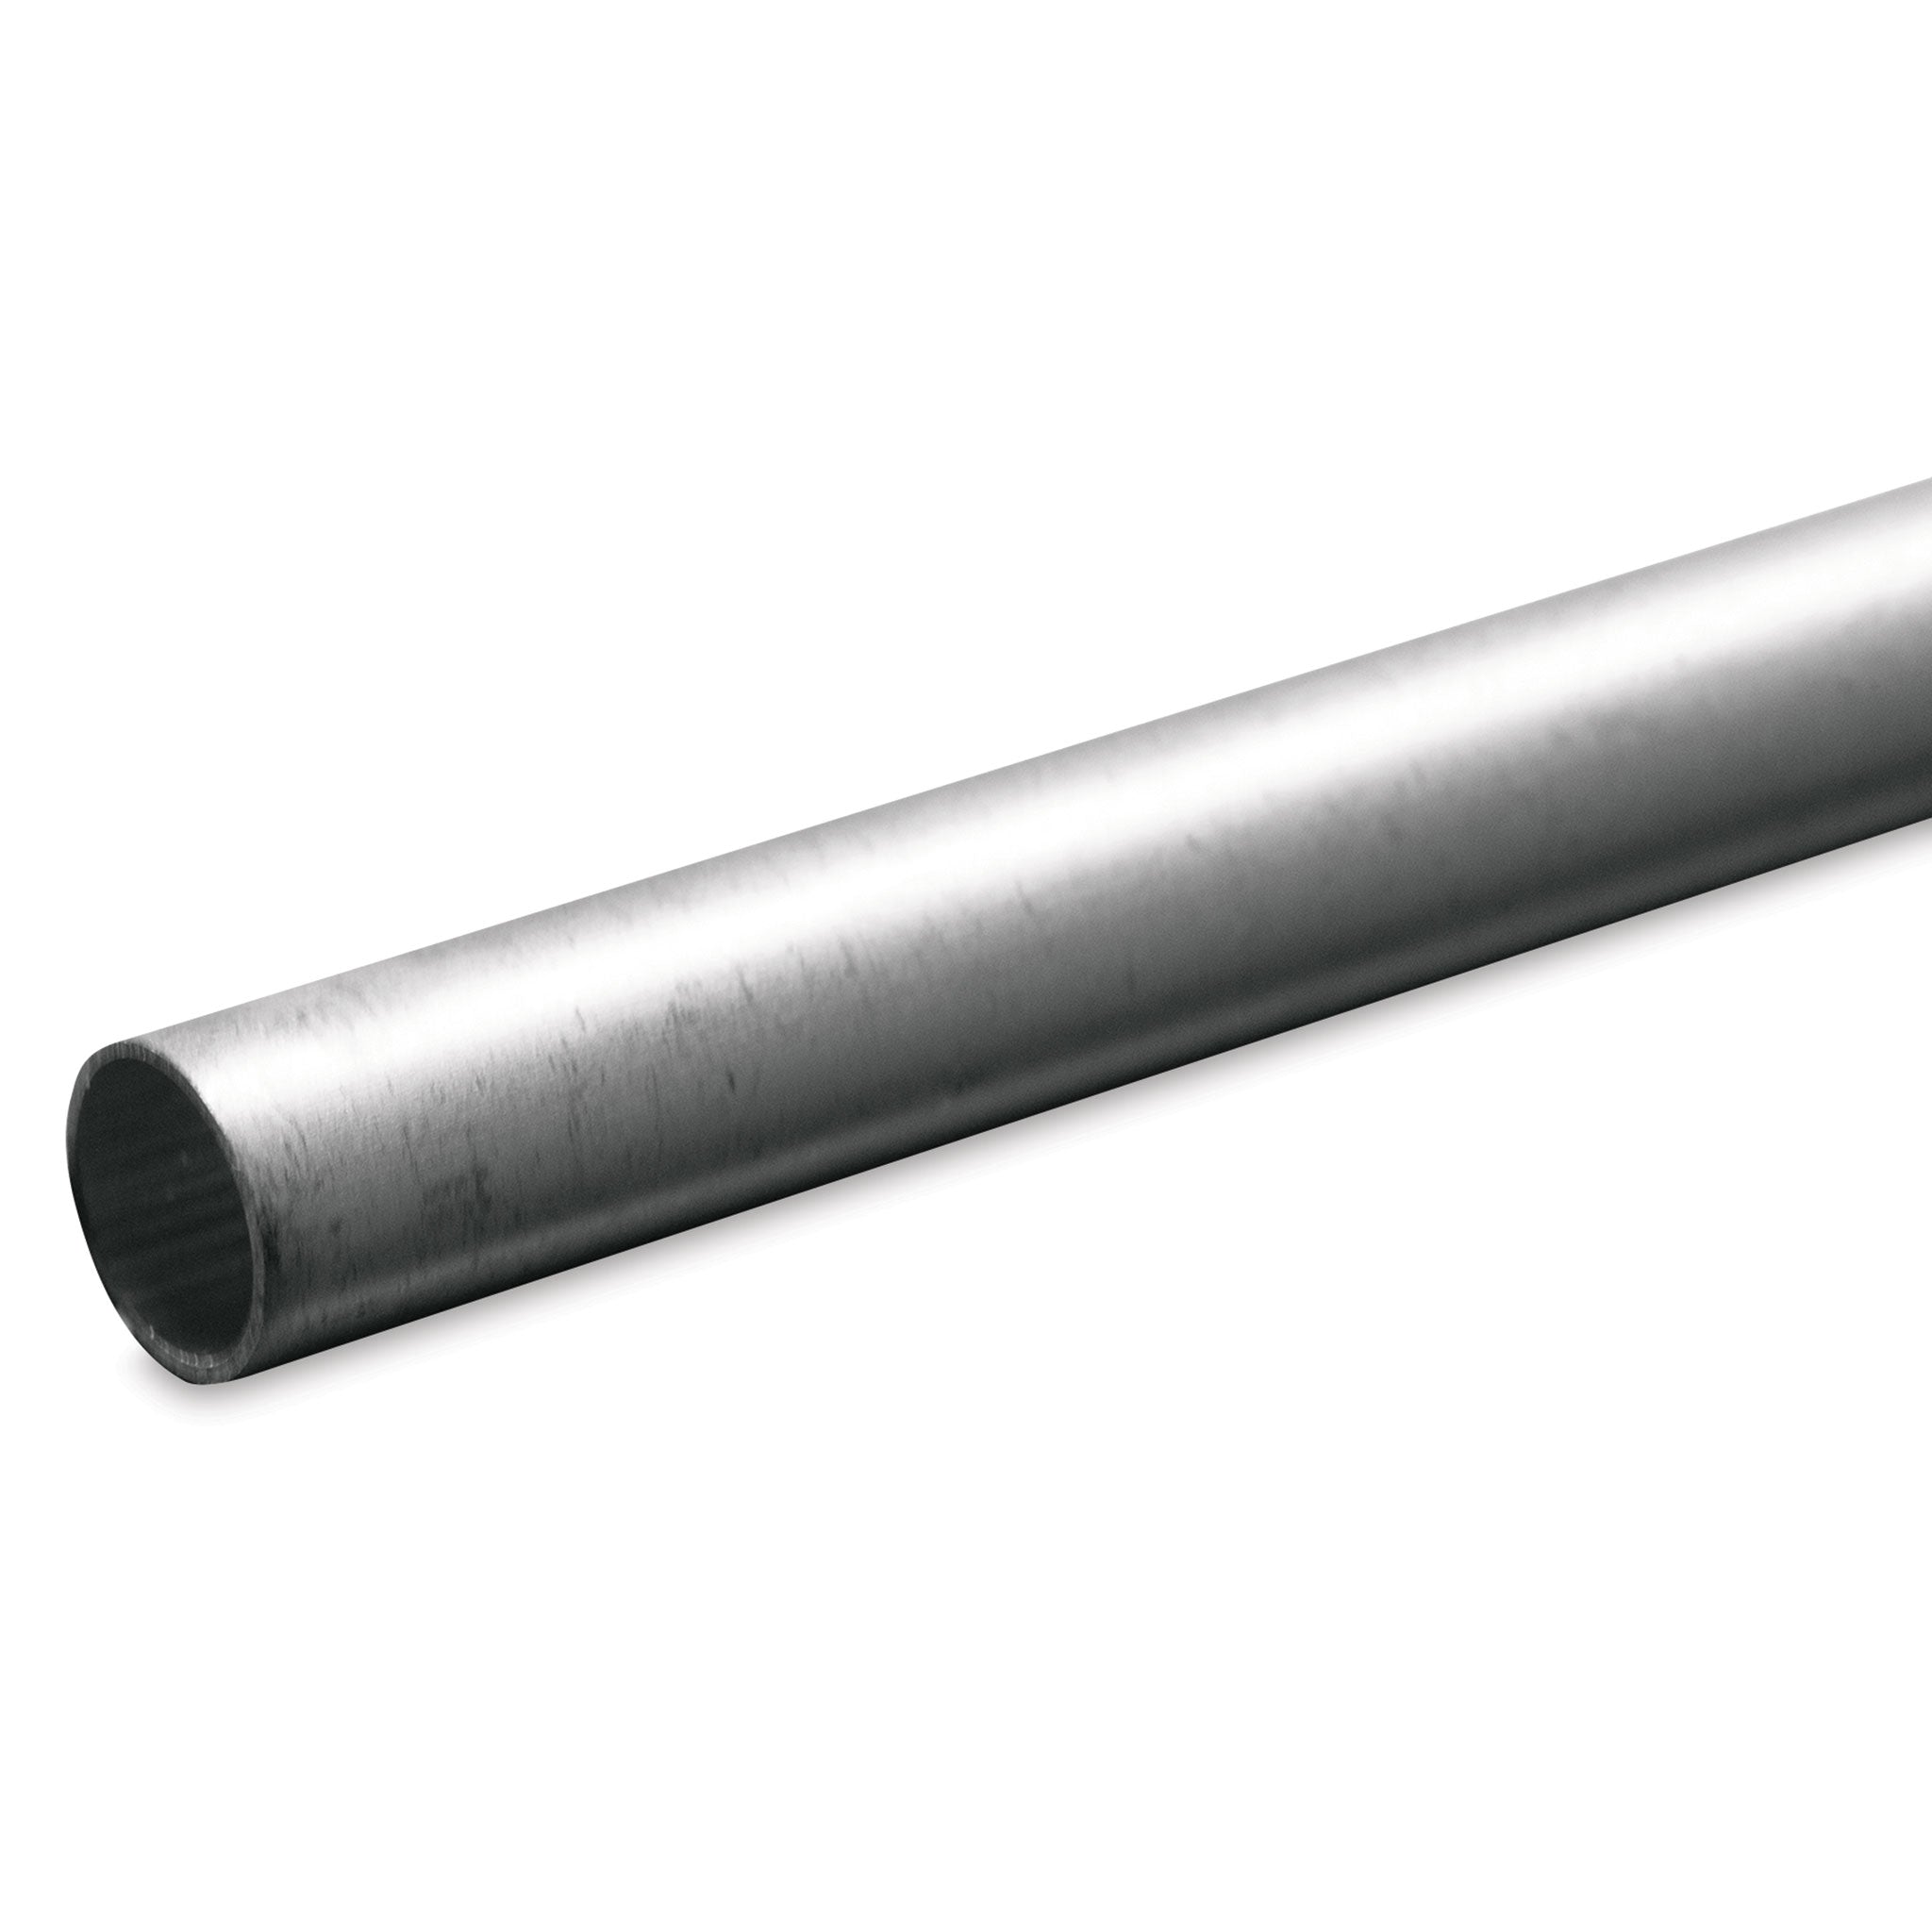 K&S Metals 1114 Round Aluminum Tube 9/32" OD x 0.014" Wall x 36" Long (1 Piece)